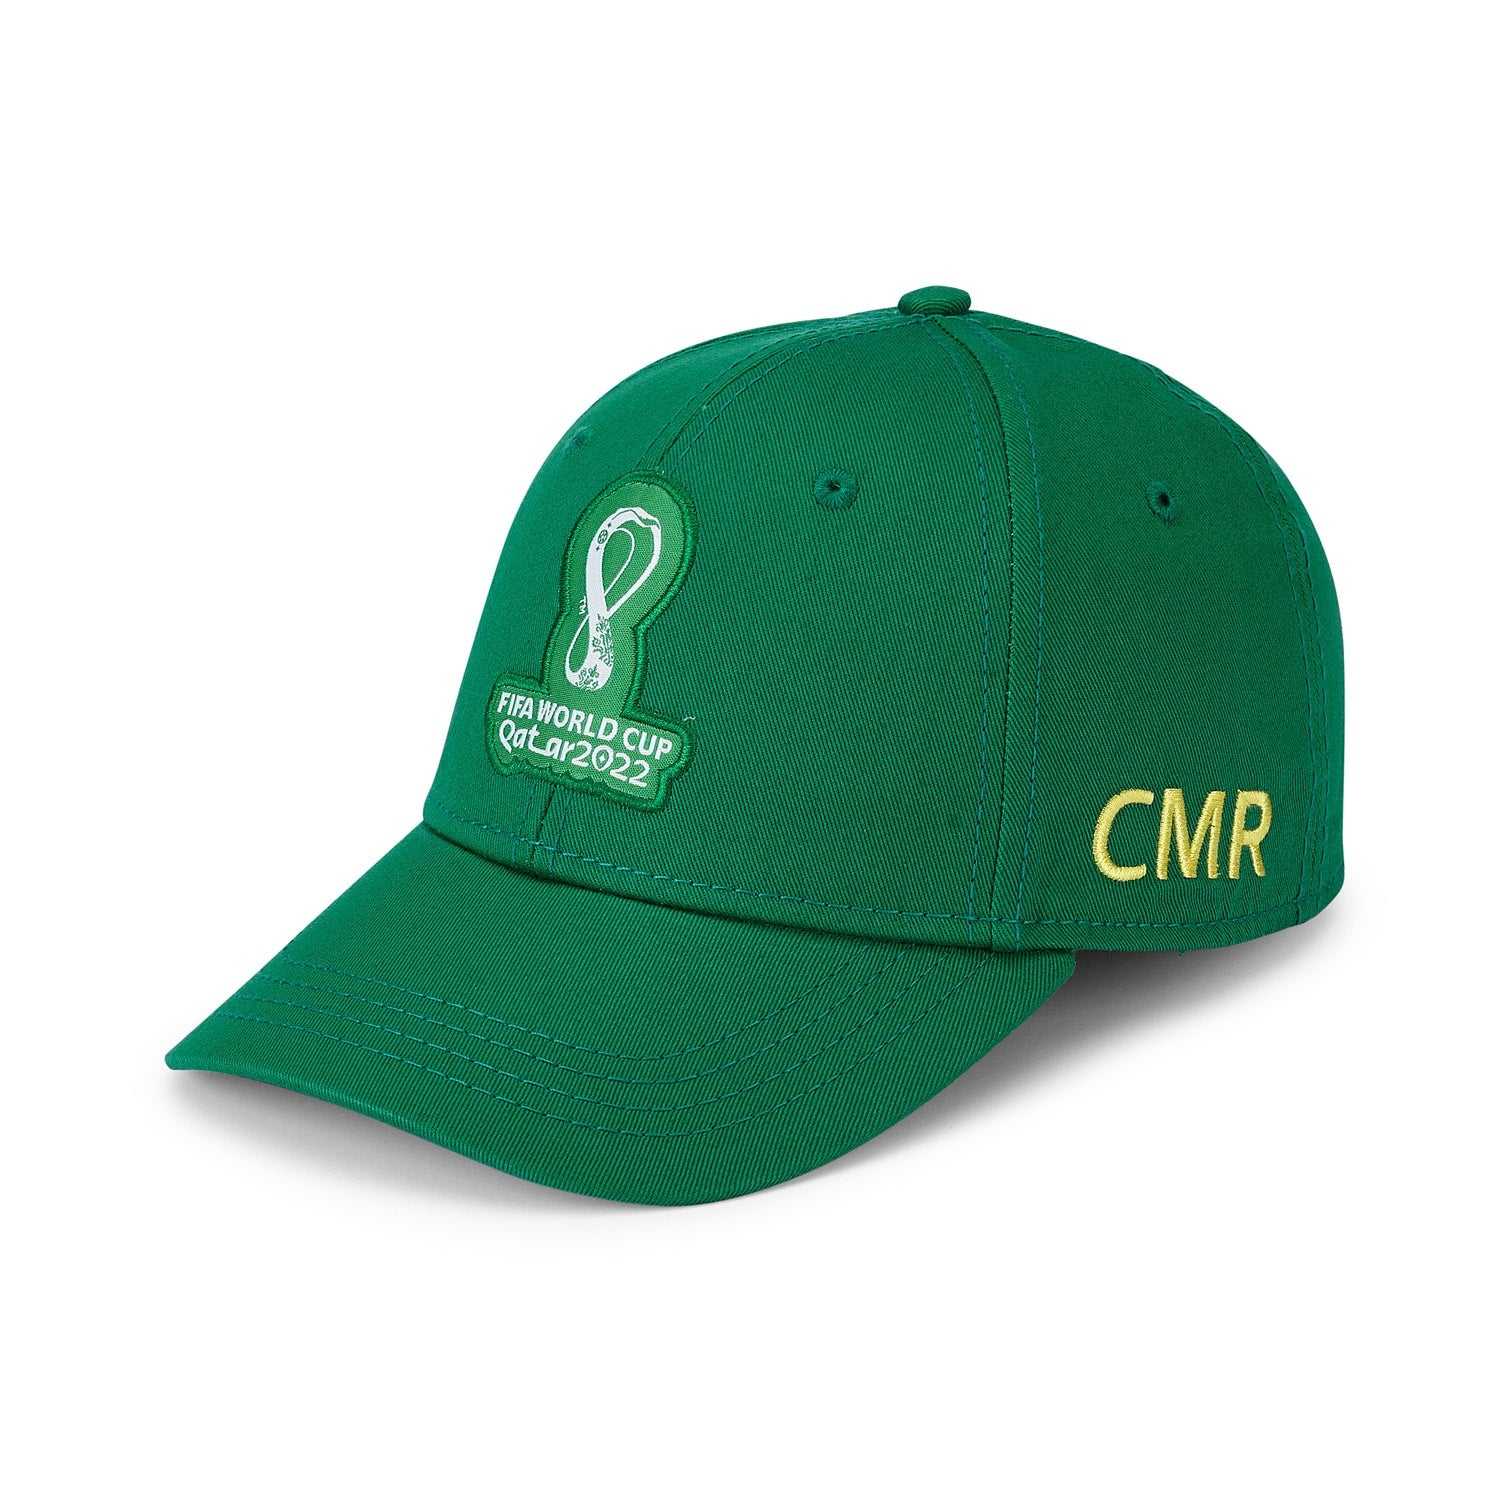 2022 World Cup Cameroon Green Cap - Men's